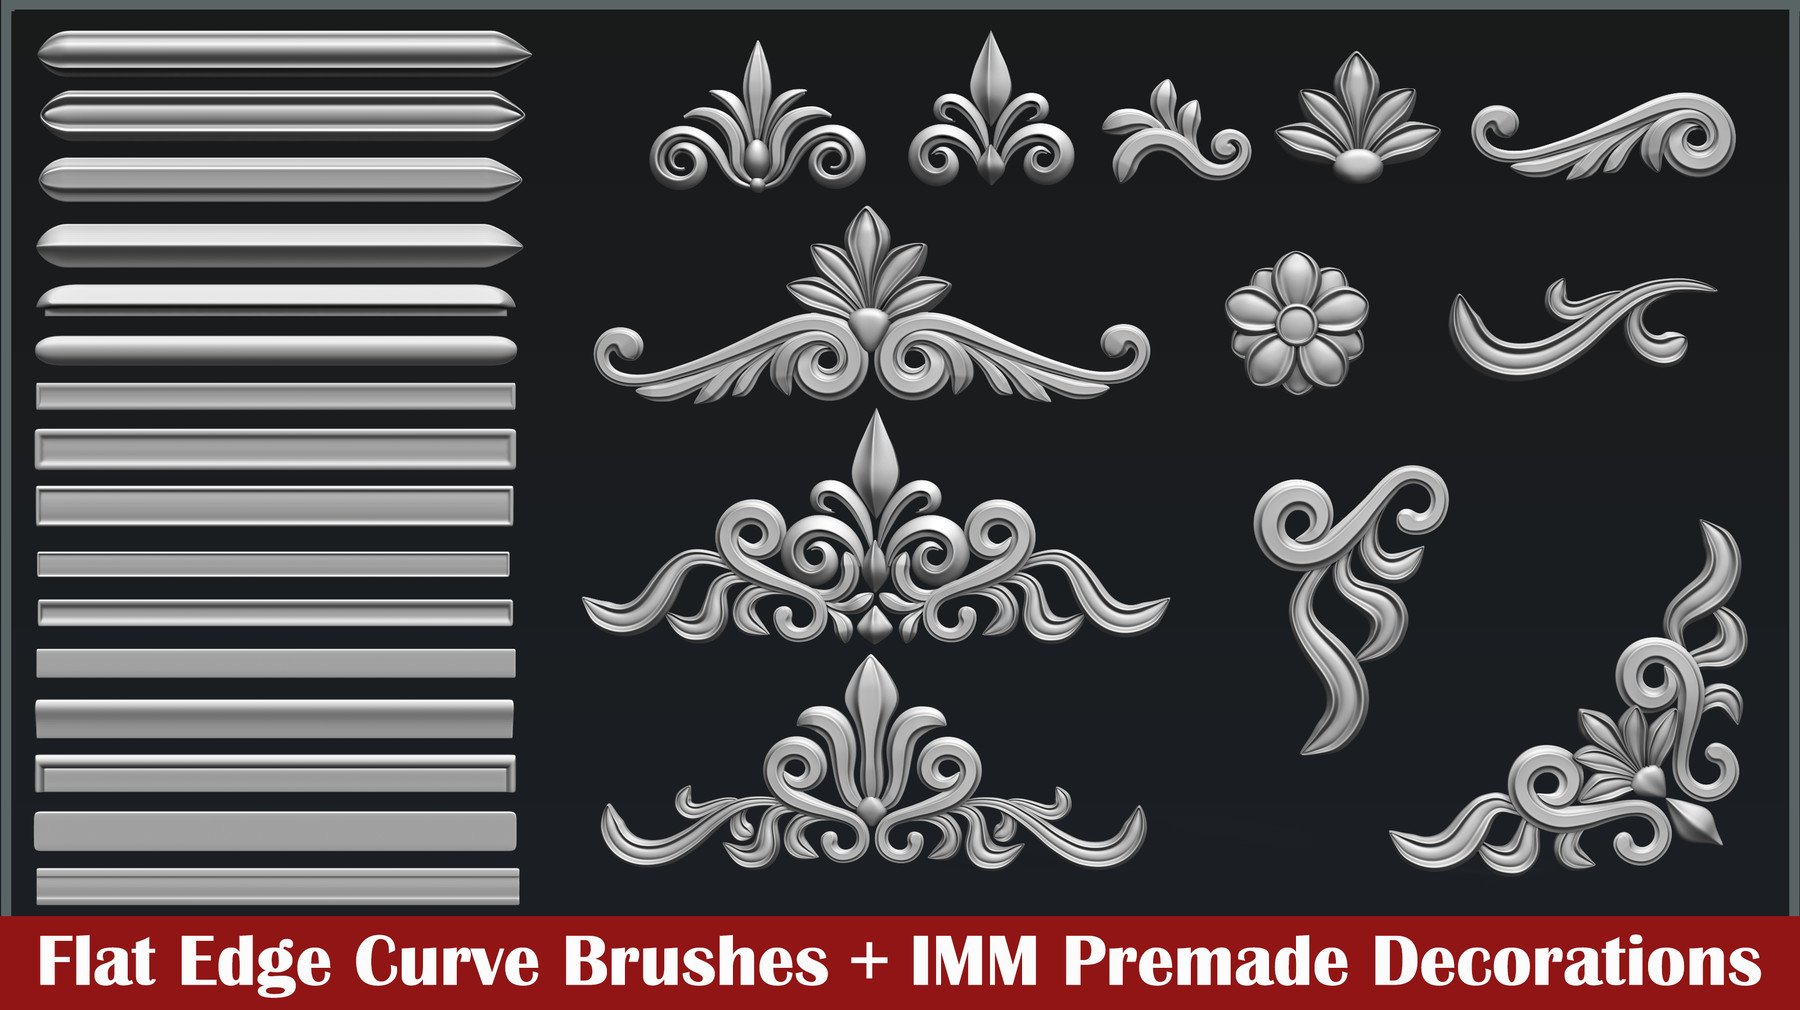 17 Flat edges curve brush + 13 IMM floral decorations